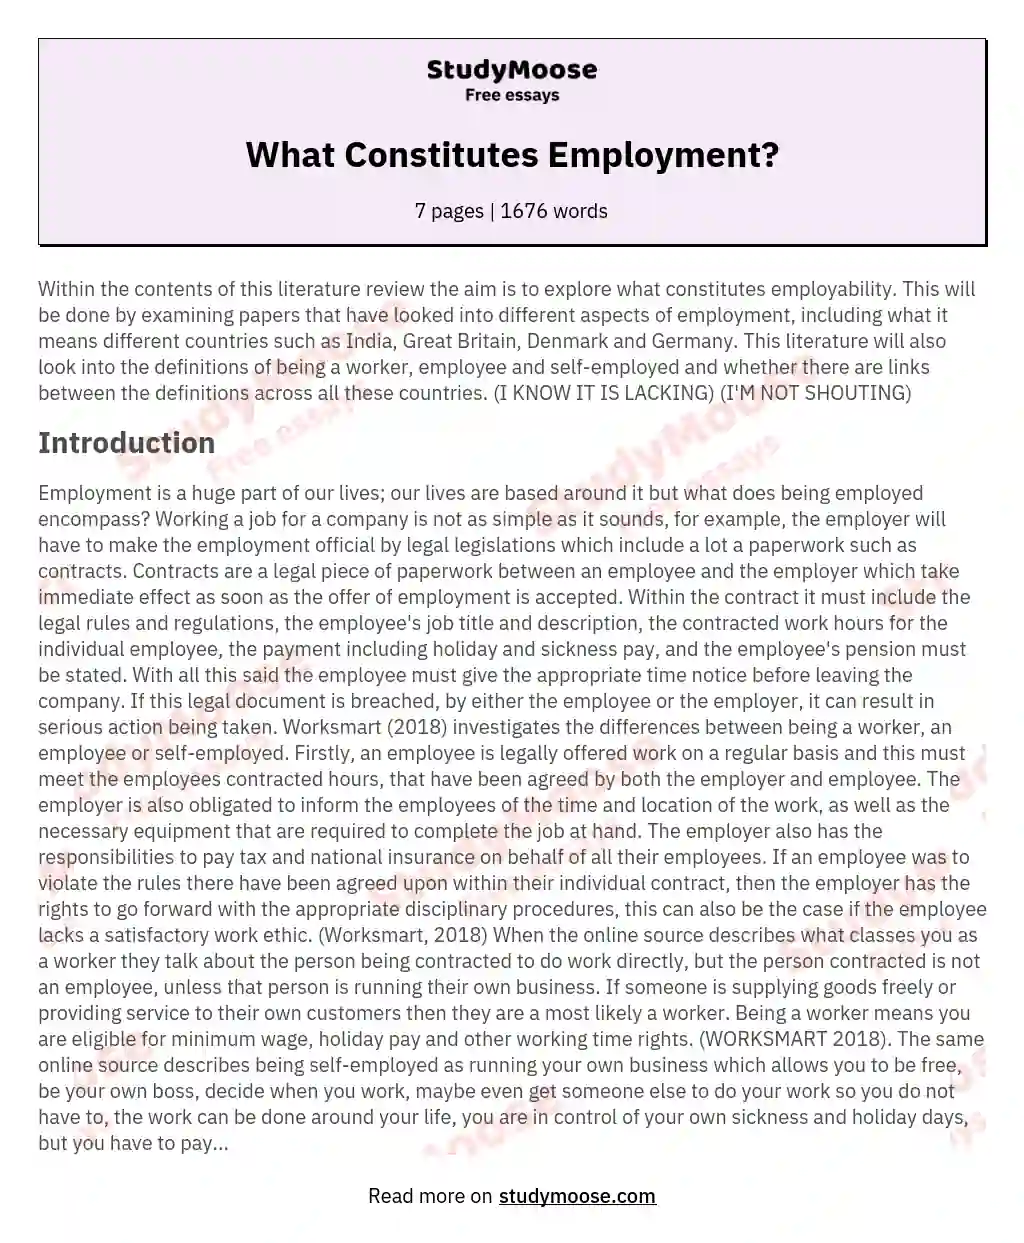 What Constitutes Employment? essay